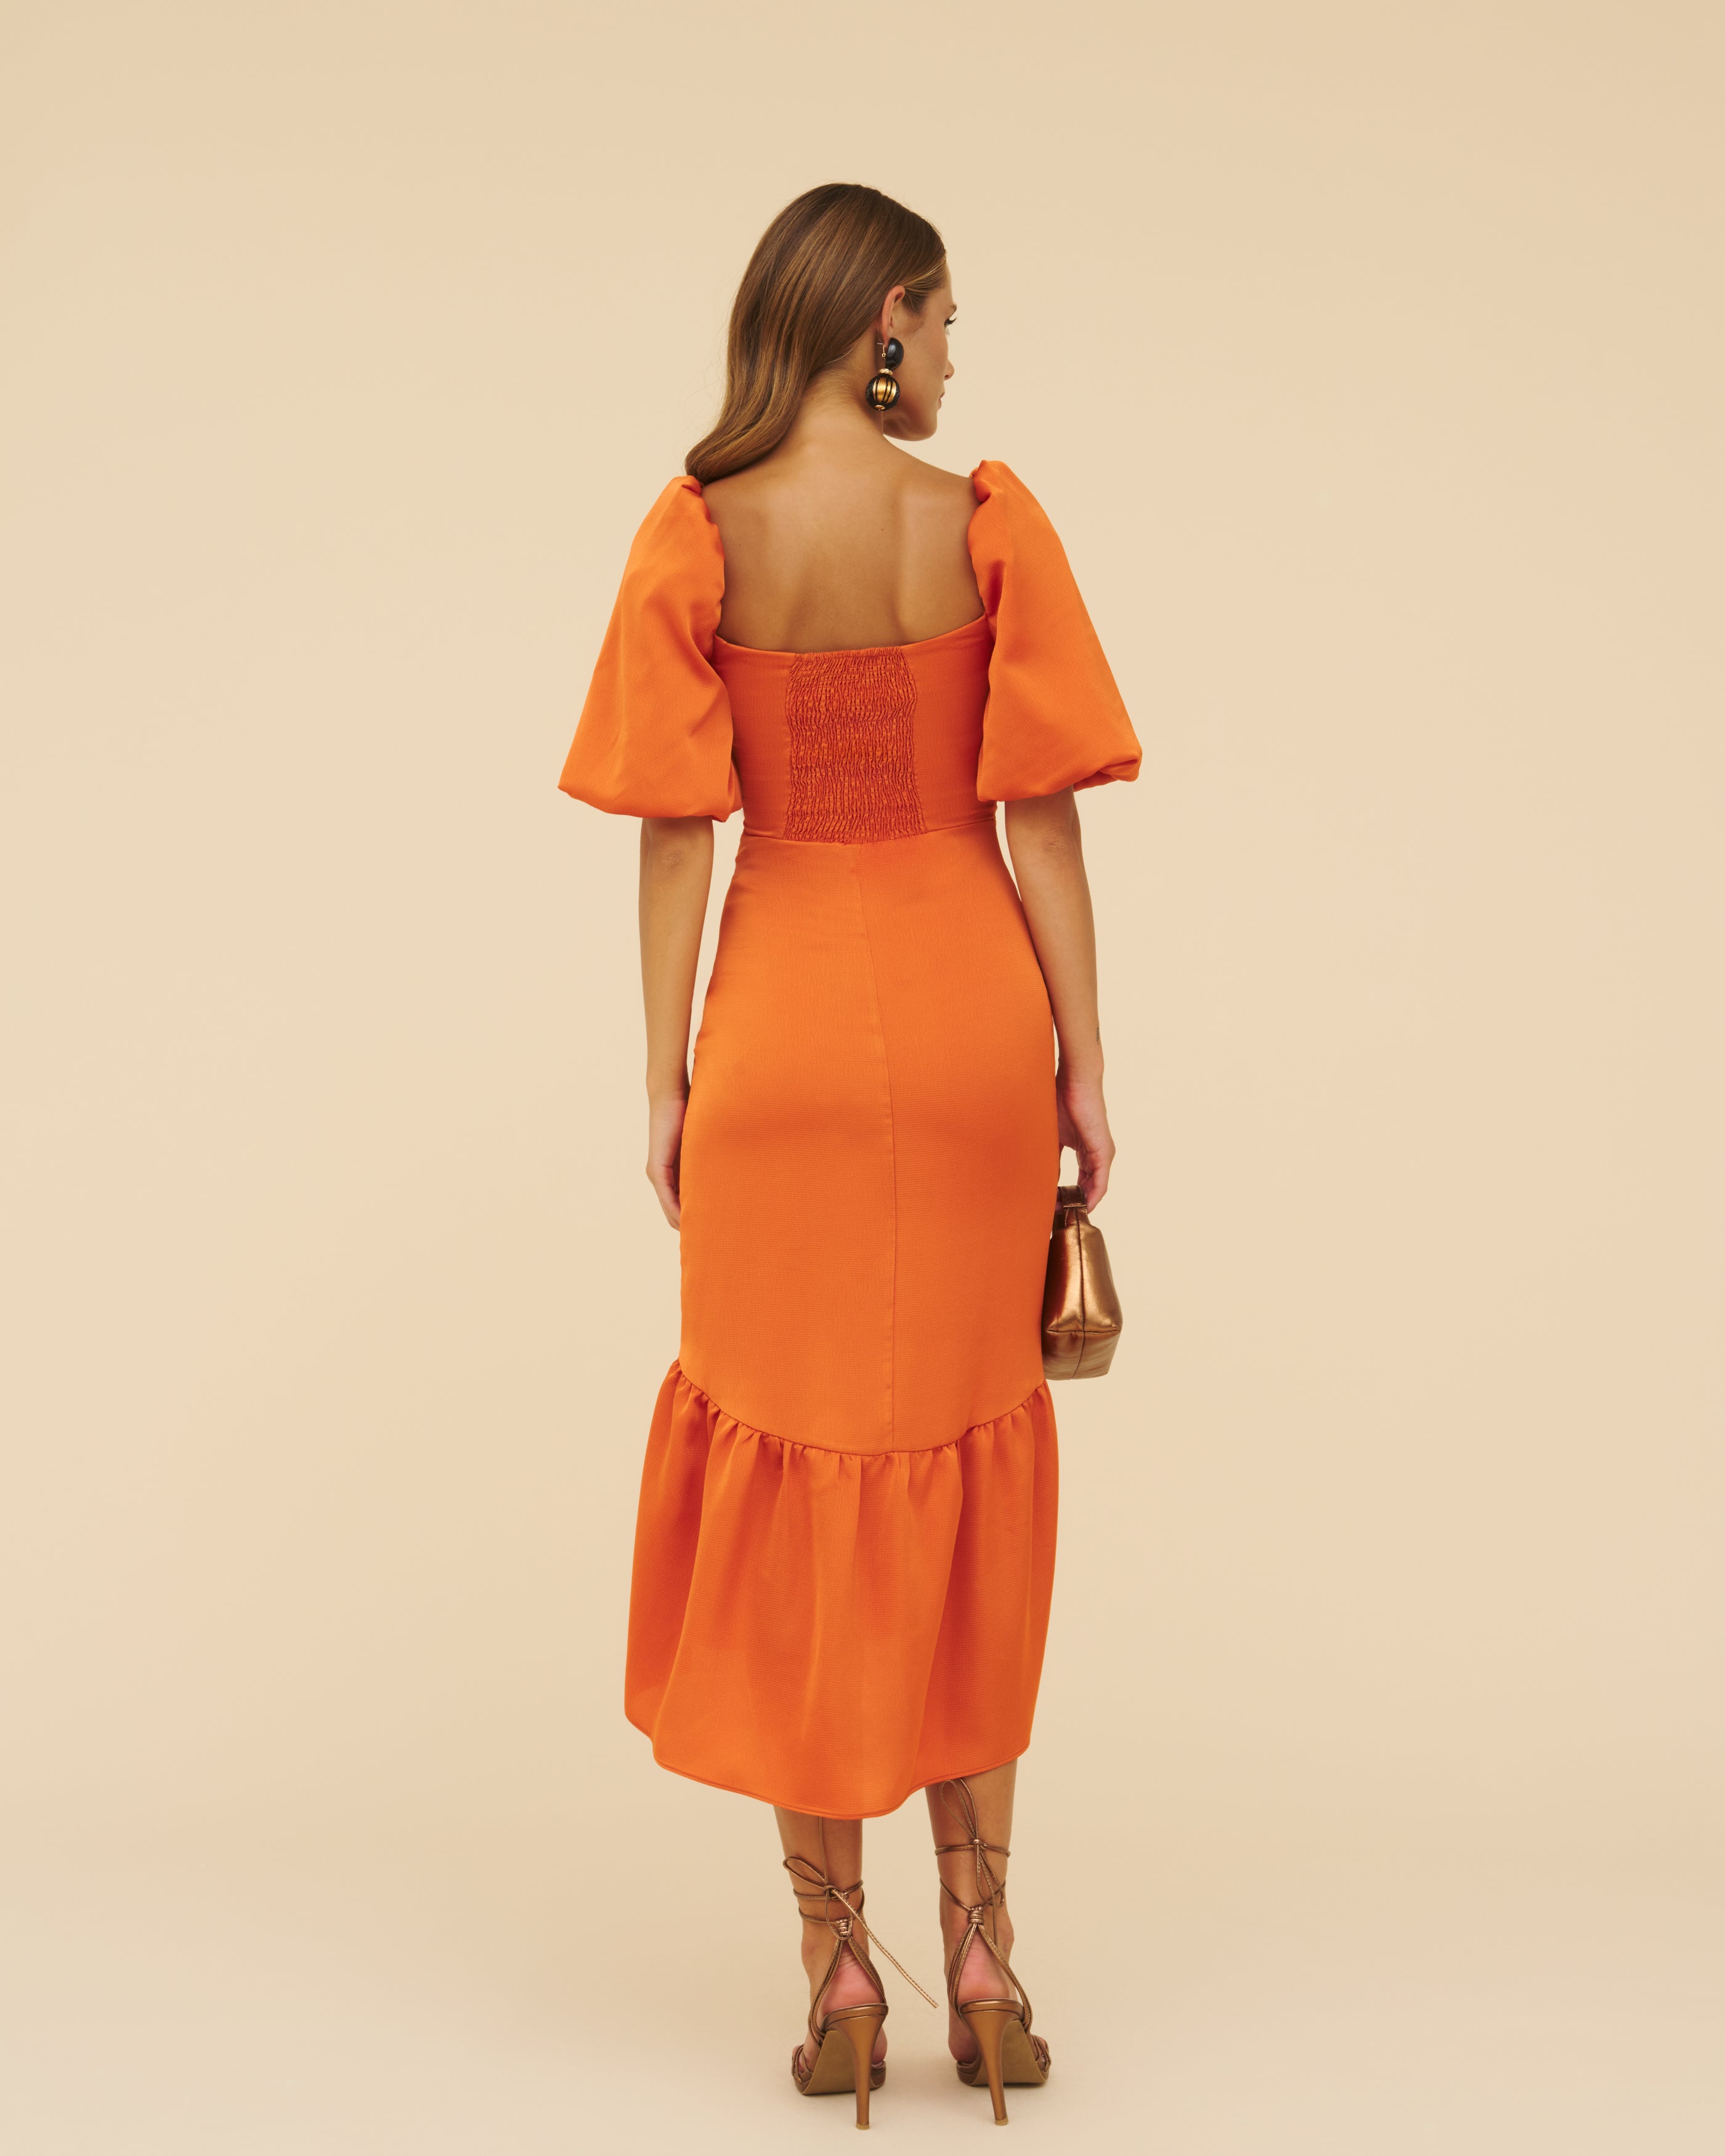 Luciana Russet Orange Dress